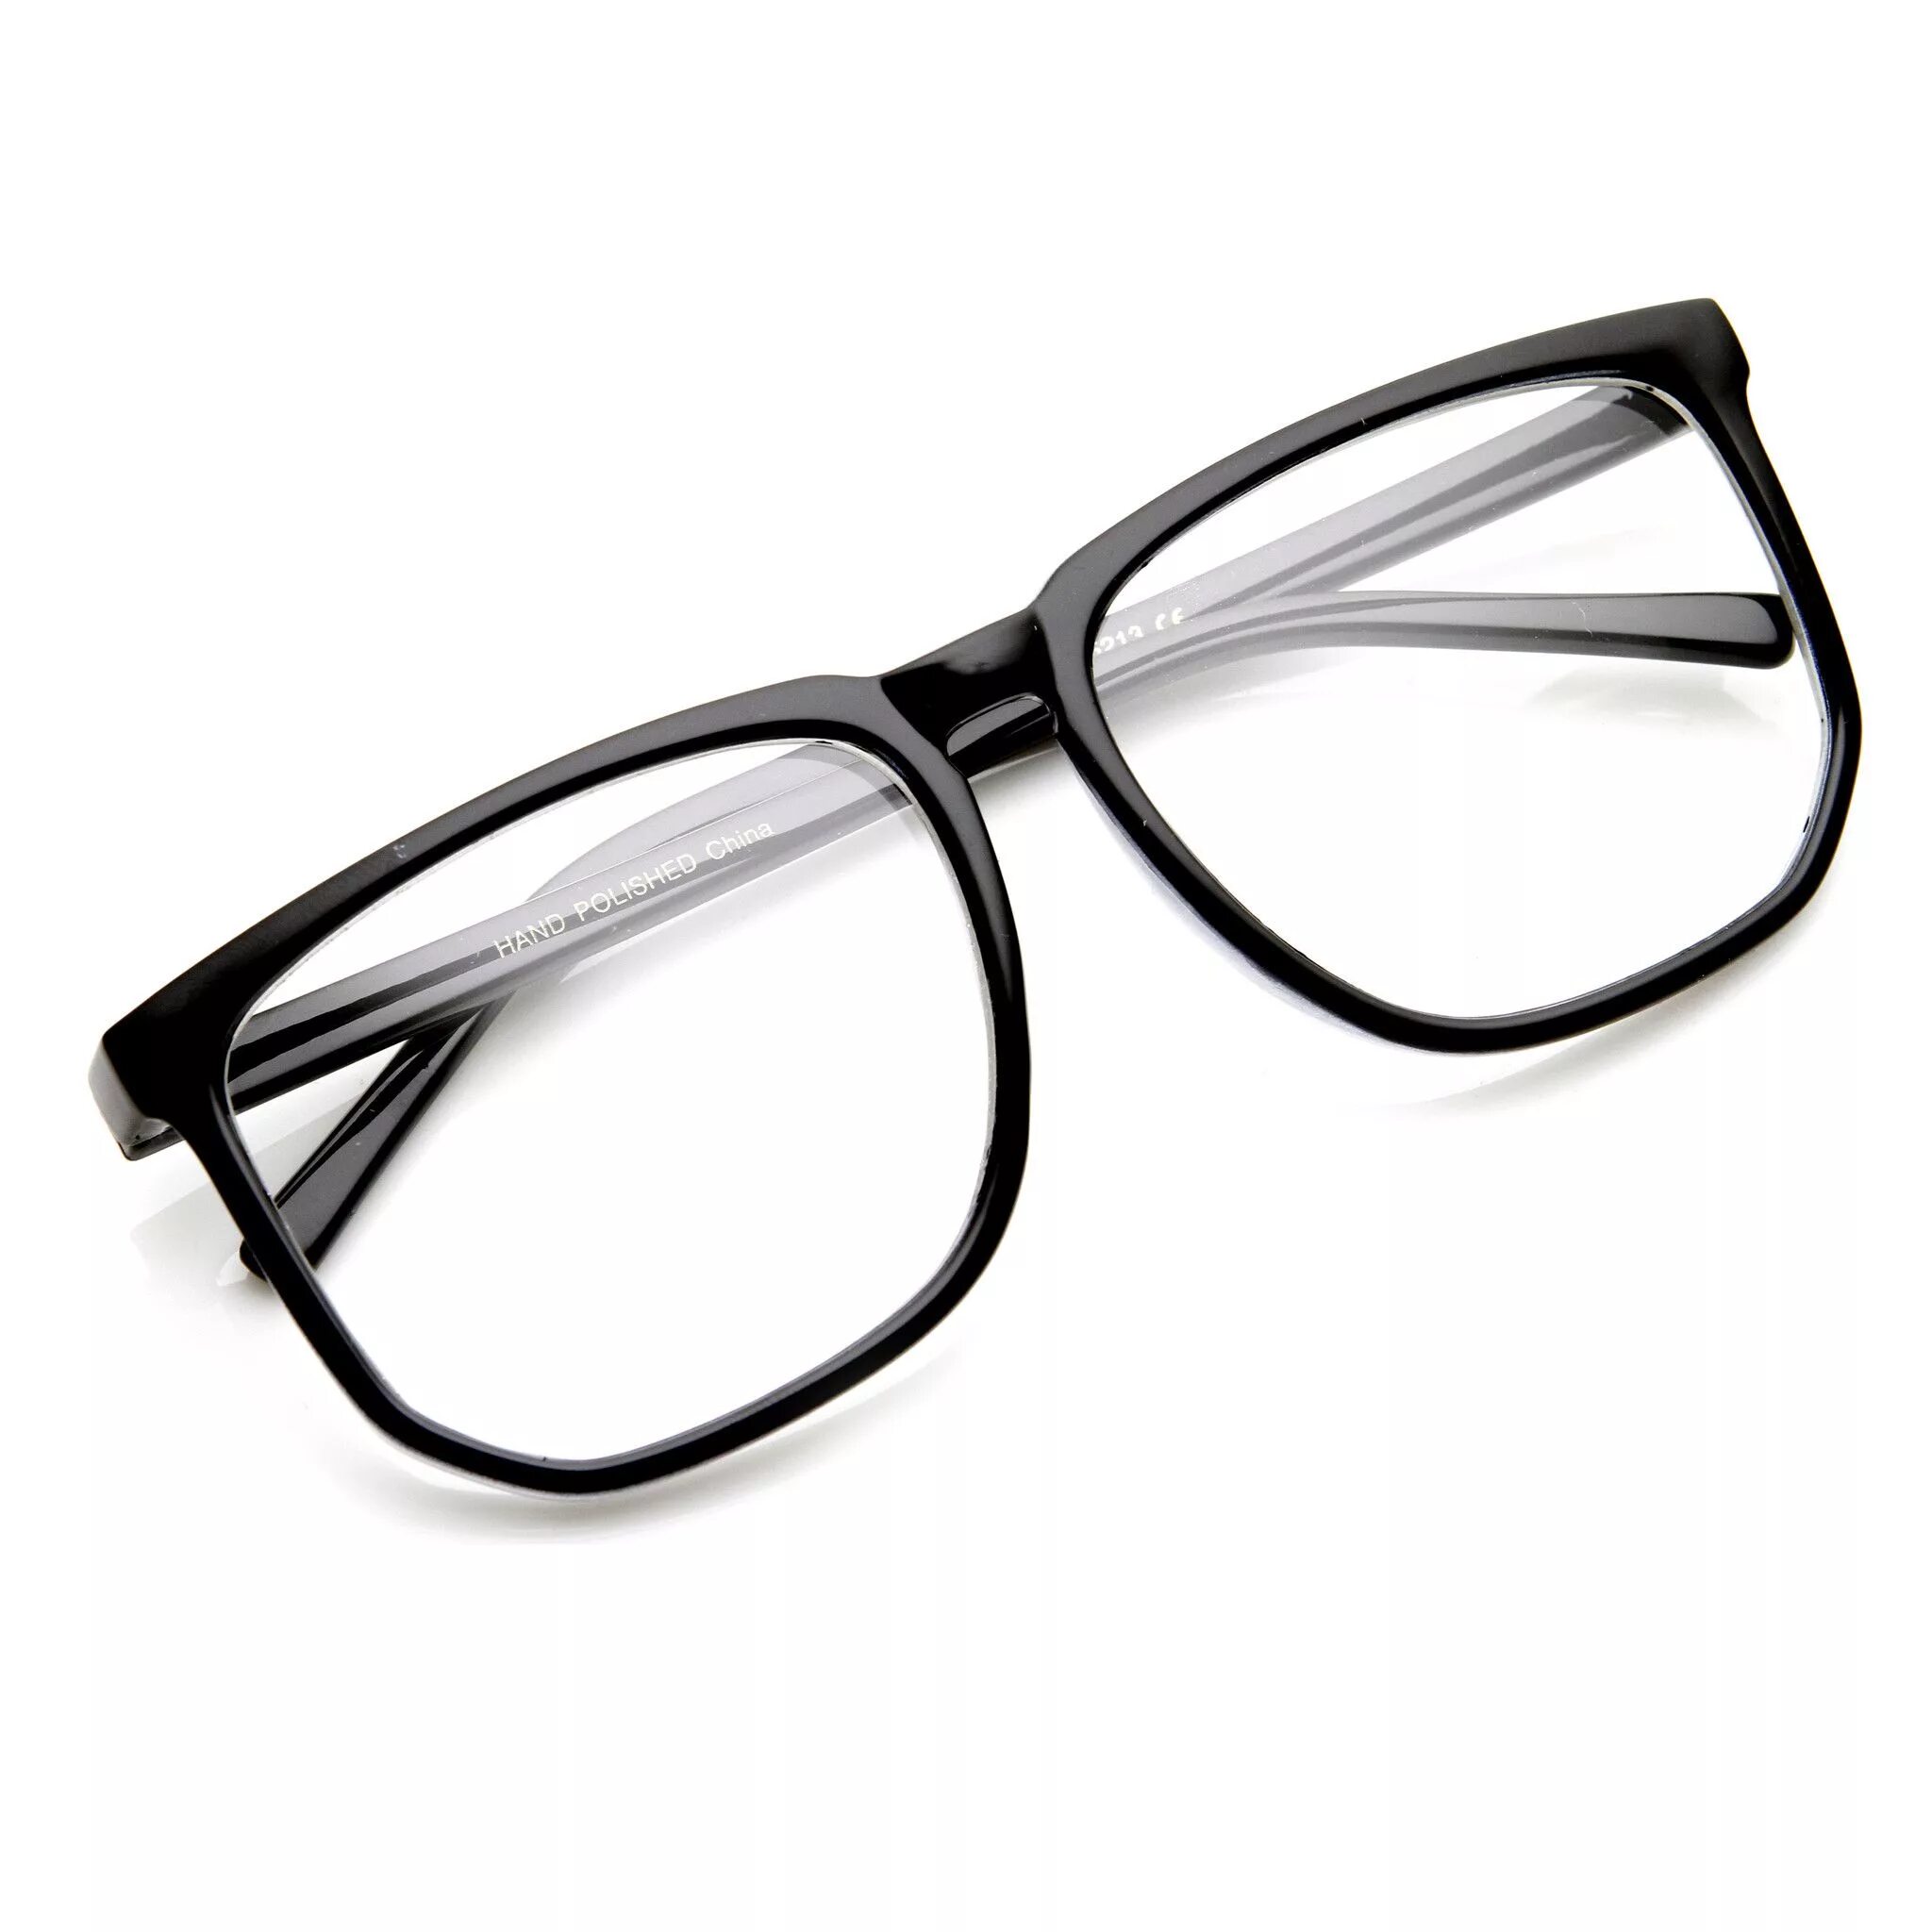 Ring glasses. Очки для зрения. Пластиковые очки для зрения. Очки для чтения. Оправа для очков.